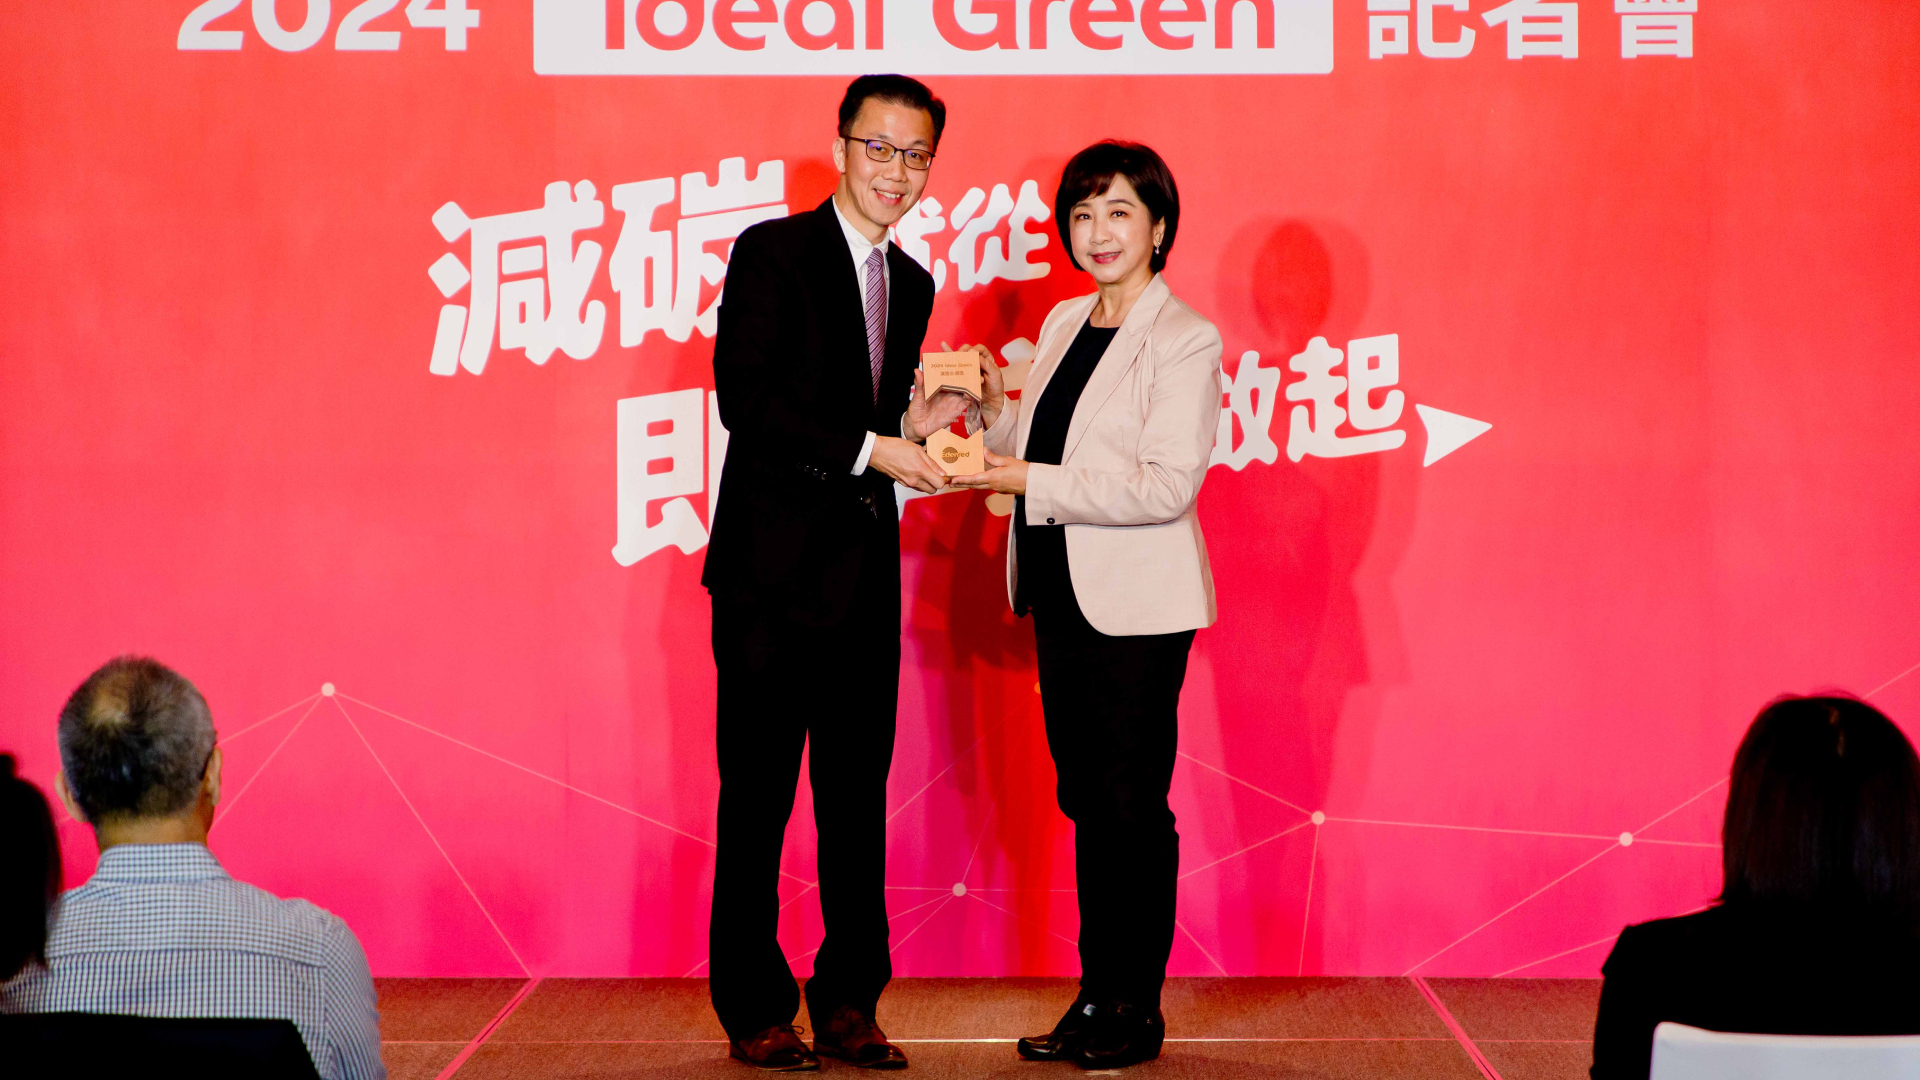 積極投入永續佈局　TVBS獲Edenred Ideal Green 減碳永續獎